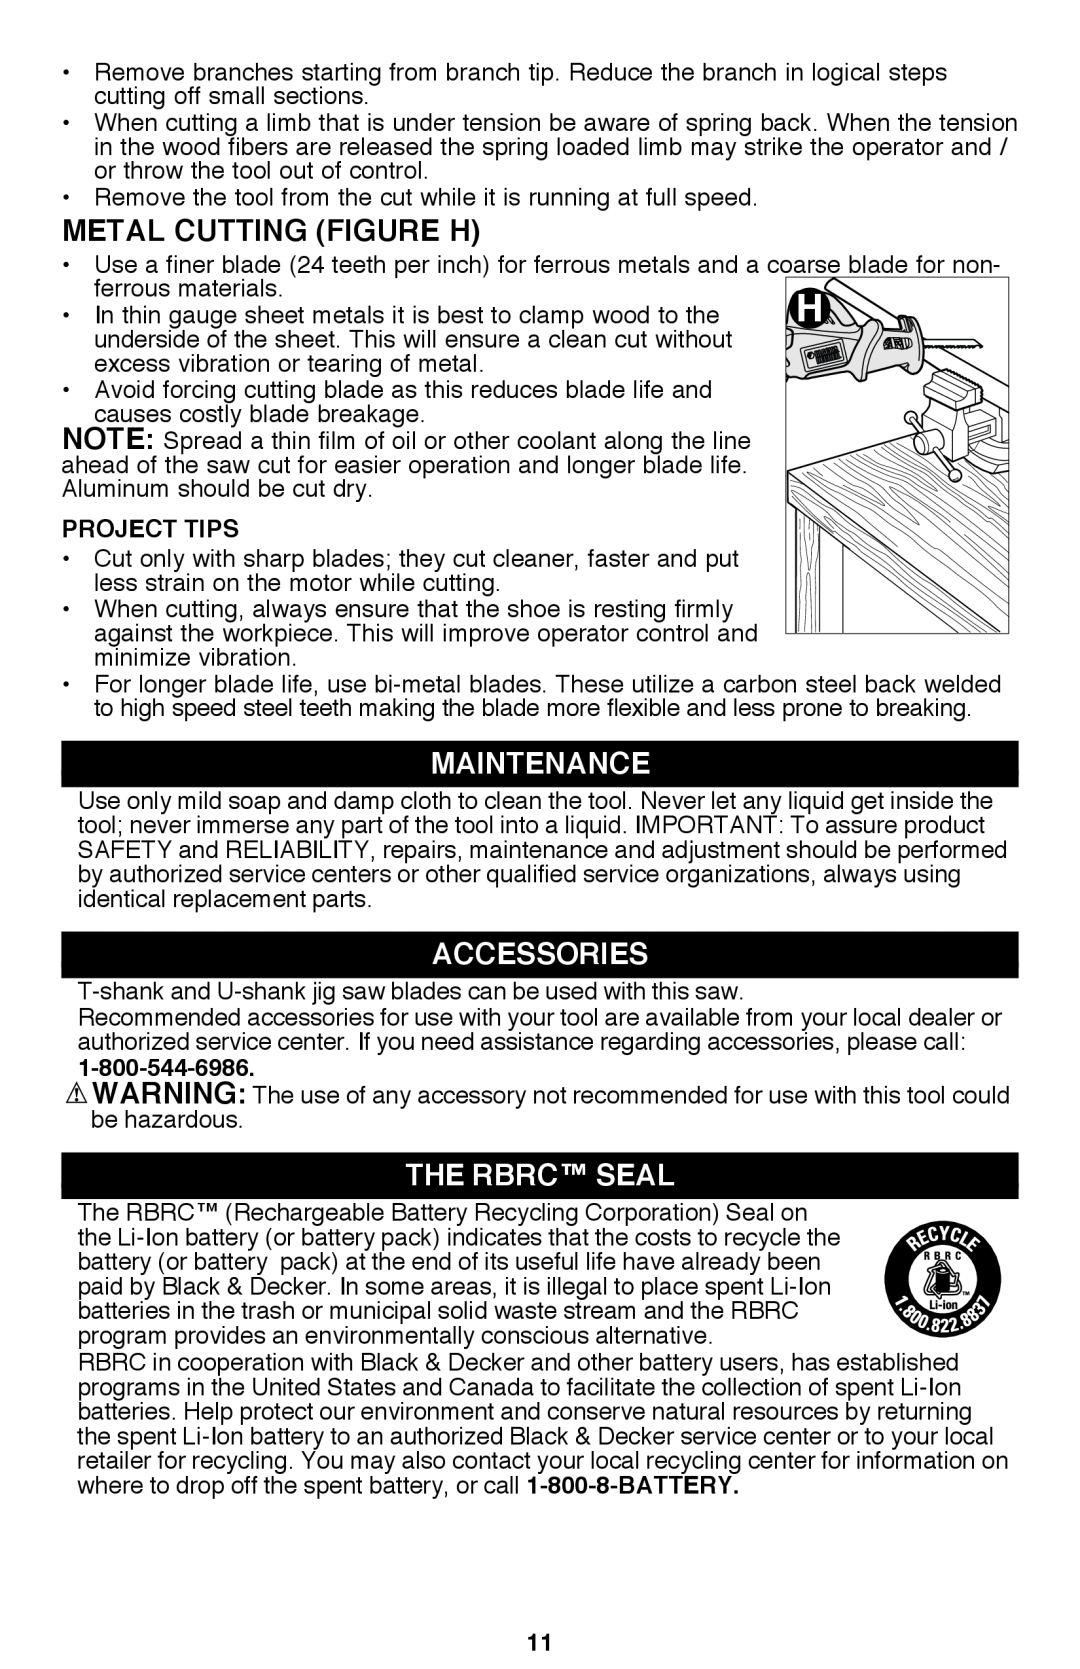 Black & Decker PSL12 instruction manual Metal Cutting Figure H, Maintenance, Accessories, The RBRC Seal 